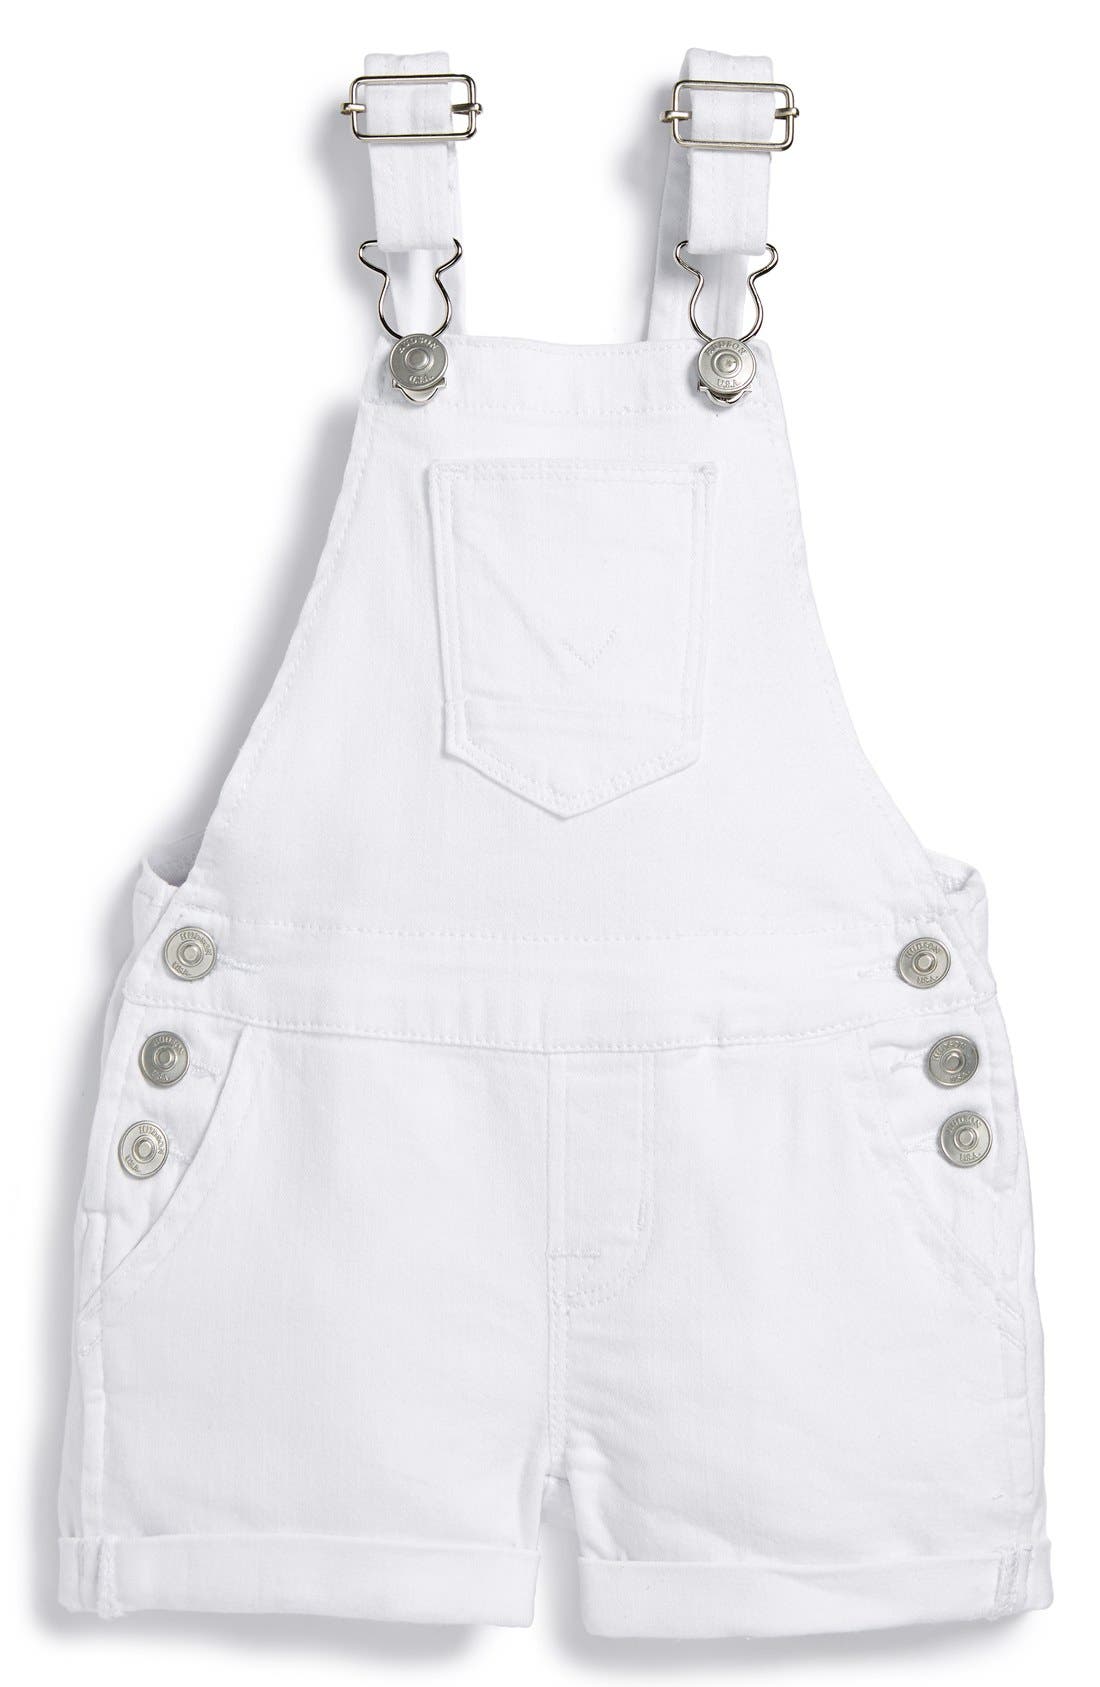 girls white overall shorts